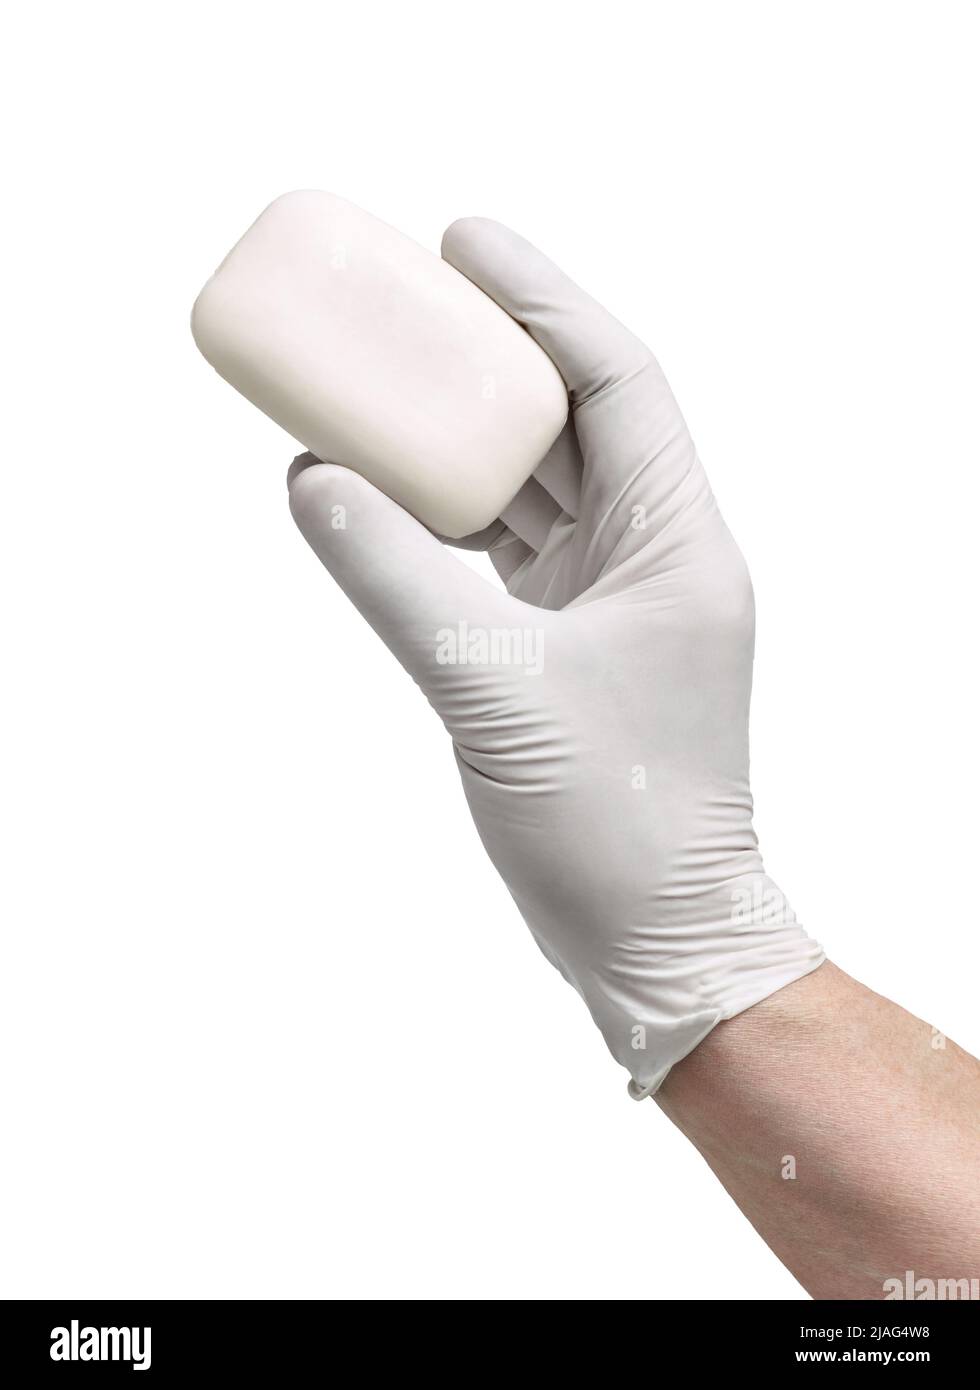 hand washing soap hygiene clean virus edpidemic disease corona flue bathroom water glove rubber latex protection Stock Photo